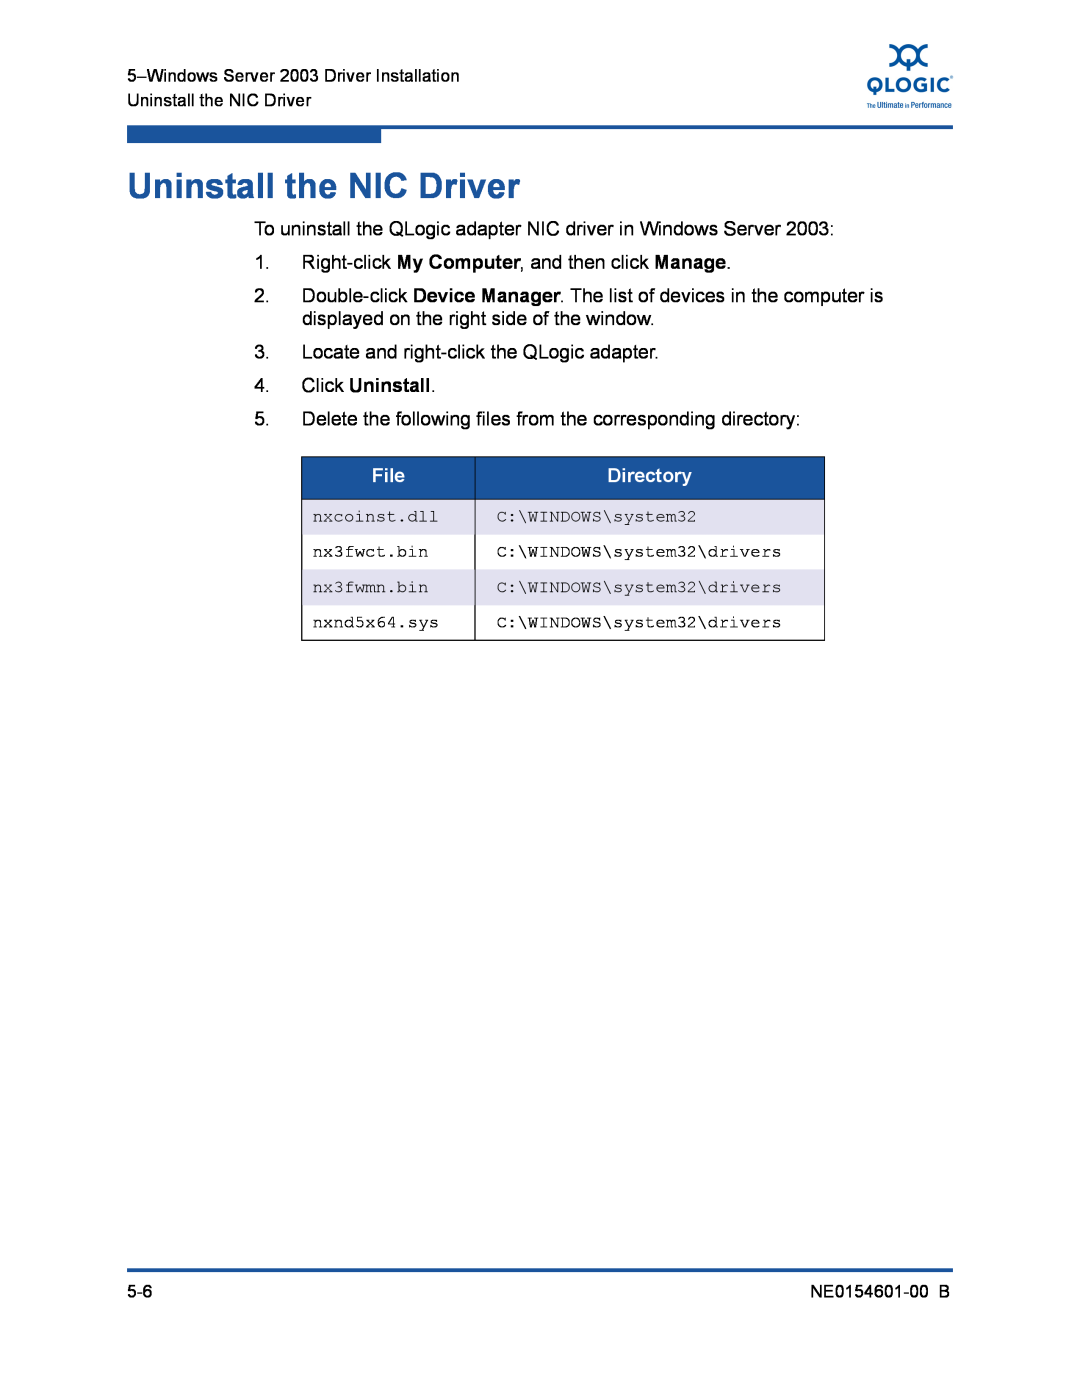 Q-Logic 3100, 3000 manual Uninstall the NIC Driver, File, Directory 